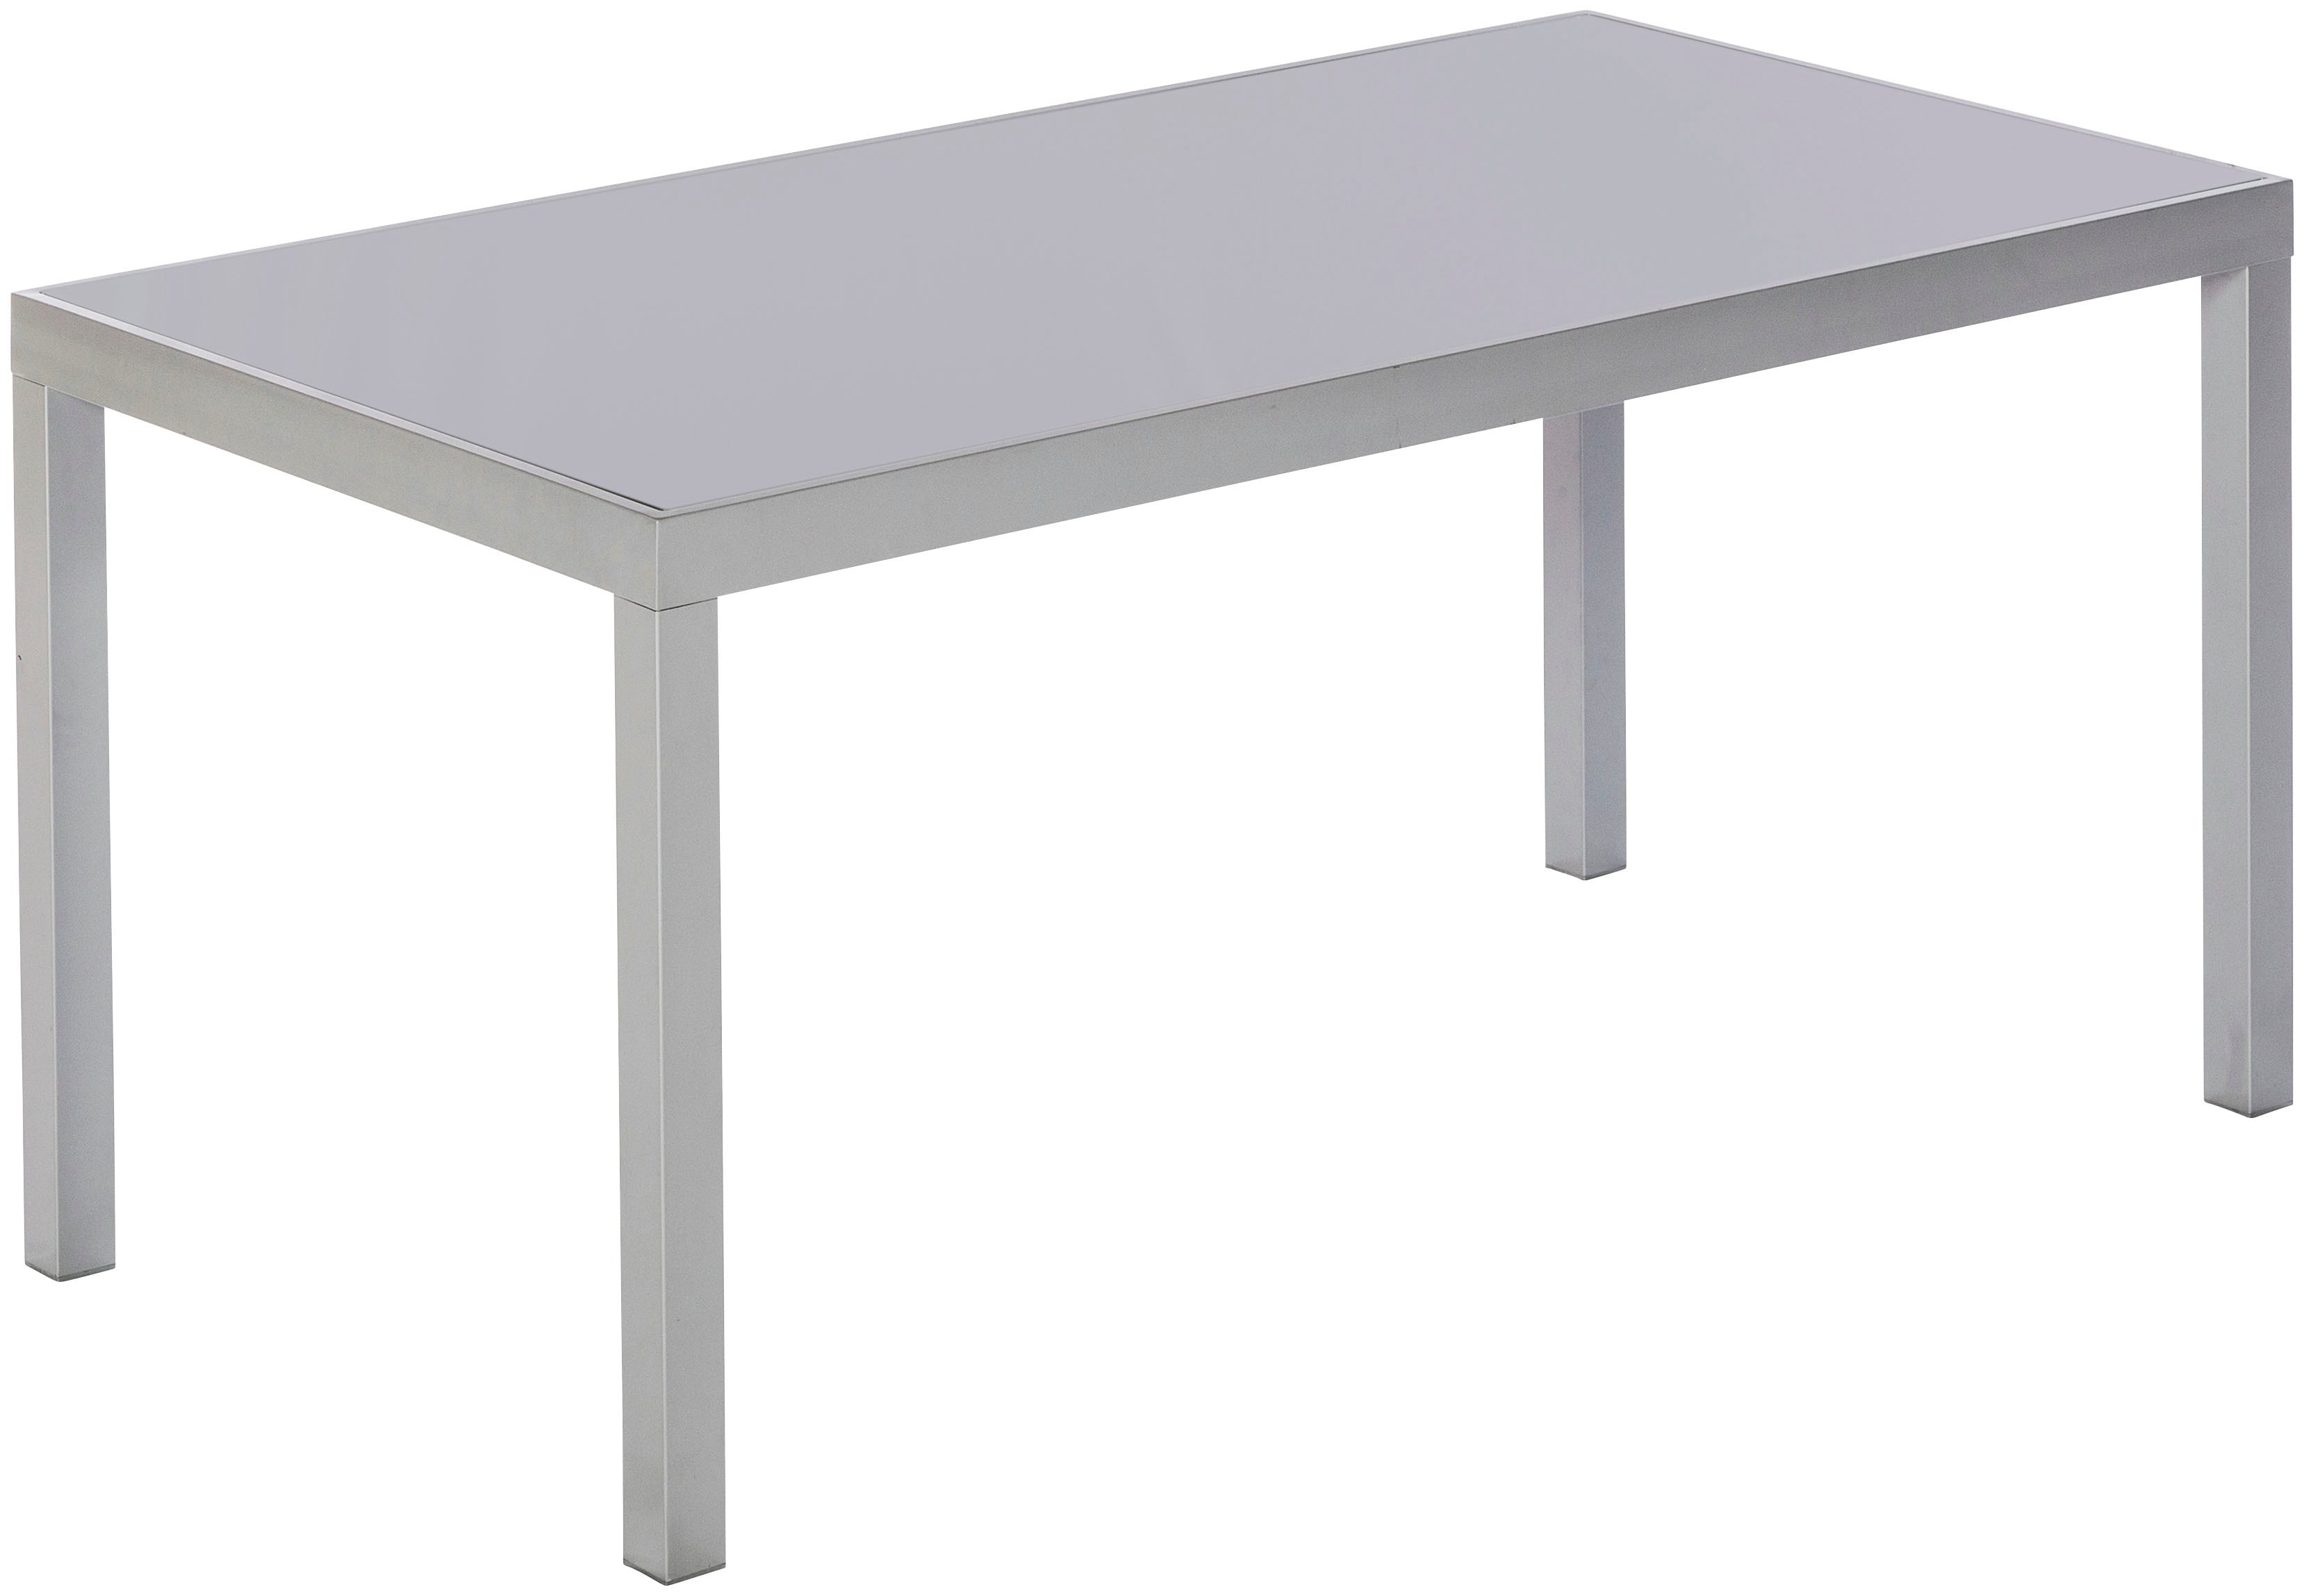 MERXX Gartentisch »Taviano«, Aluminium, 150x90 cm, silber